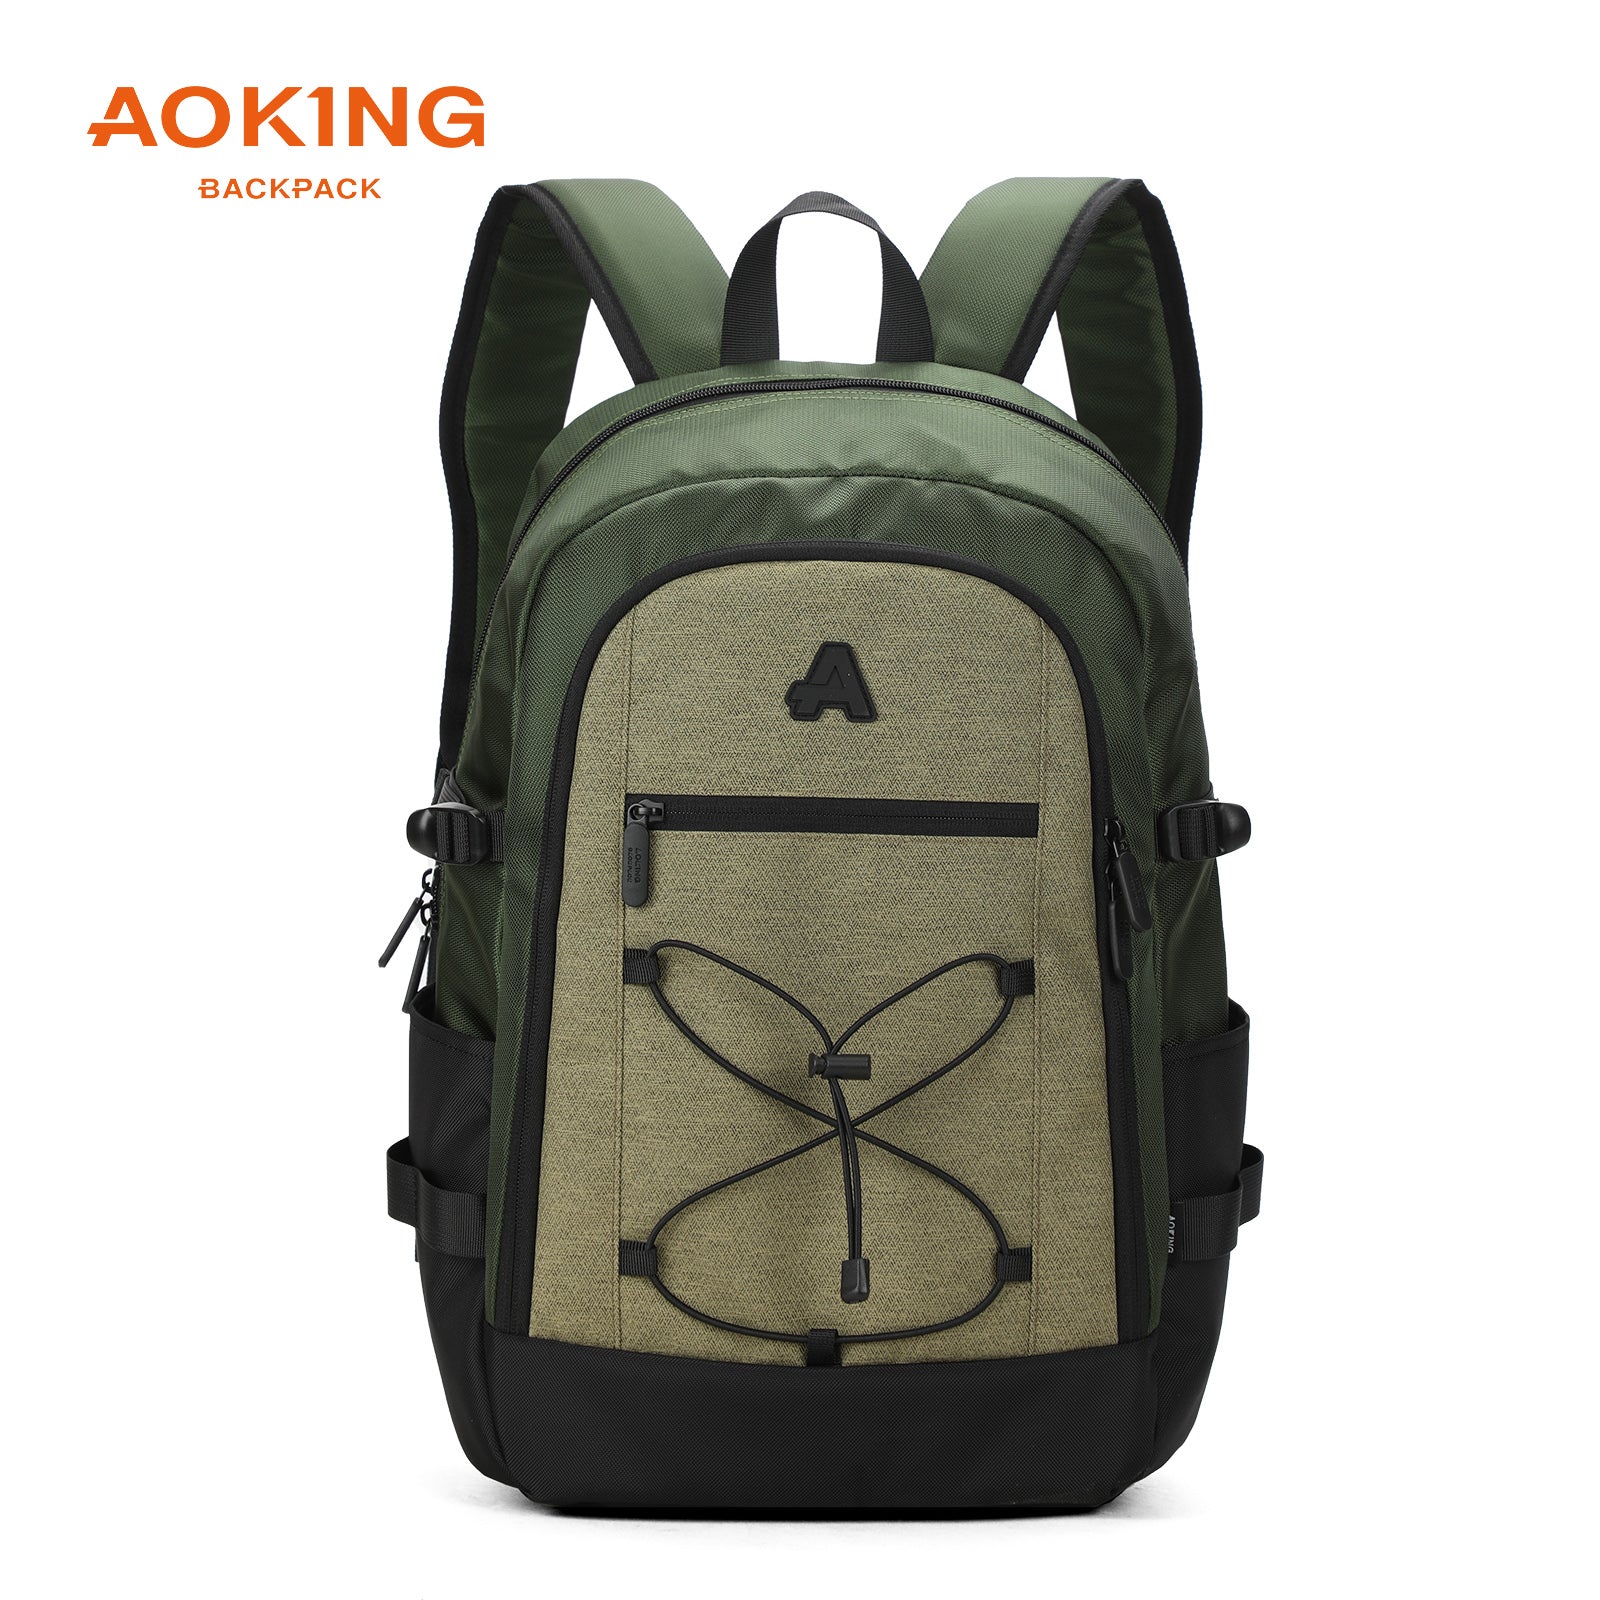 Aoking Backpack Casual Backpack Student Bag XN3508